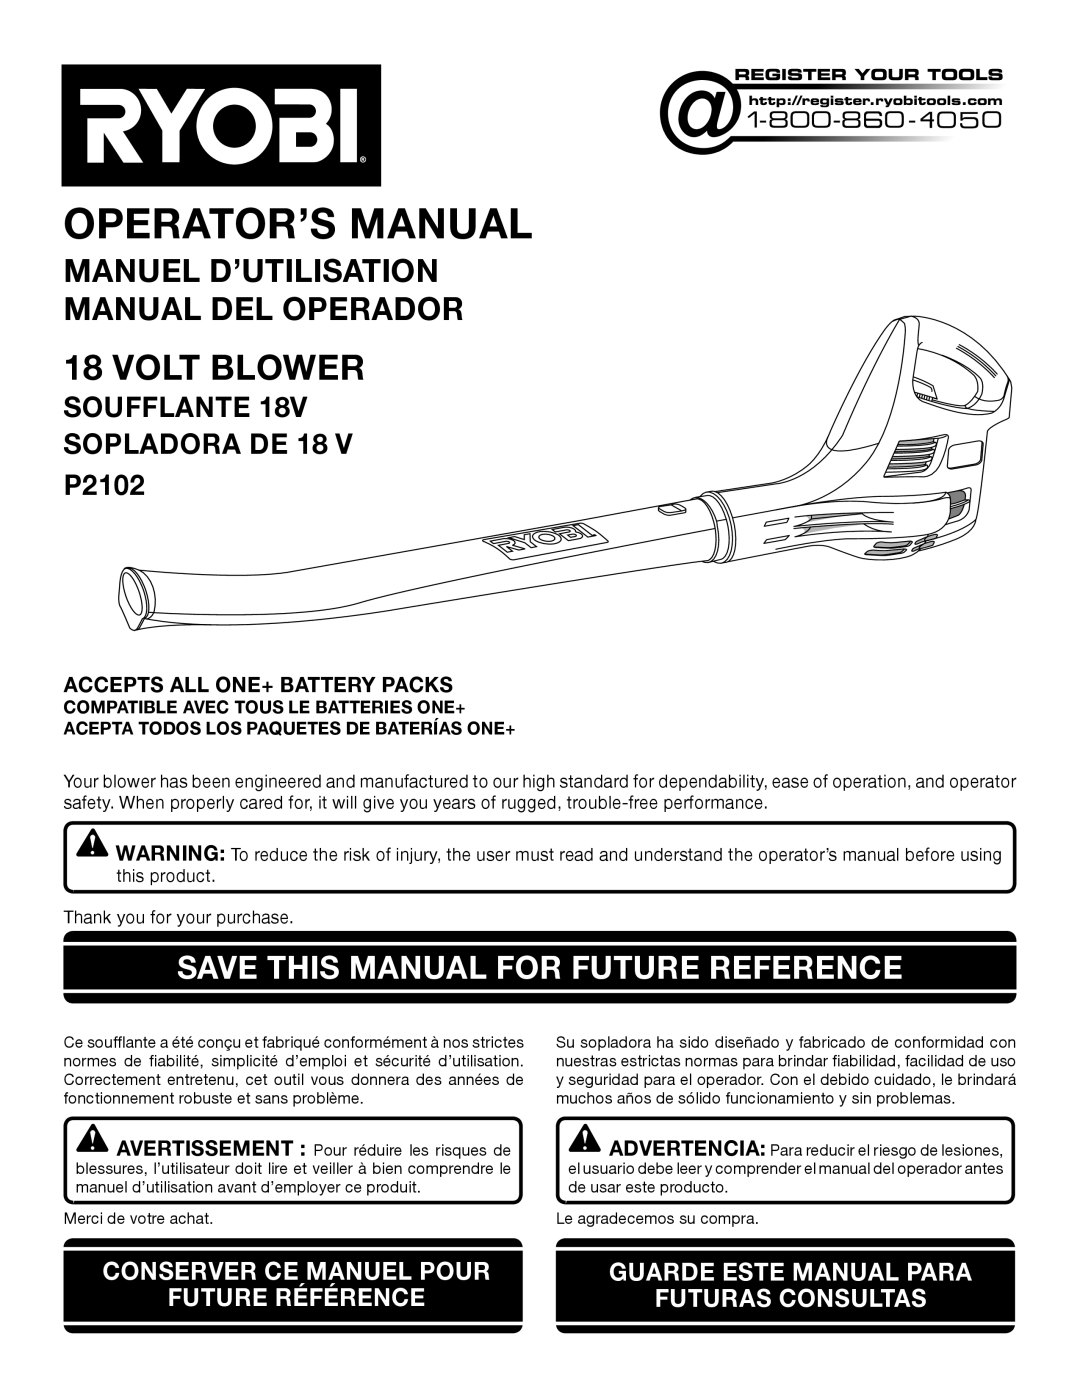 Ryobi manuel dutilisation Volt Blower, Save This Manual For Future Reference, SOUFFLANTE SOPLADORA DE 18 P2102 